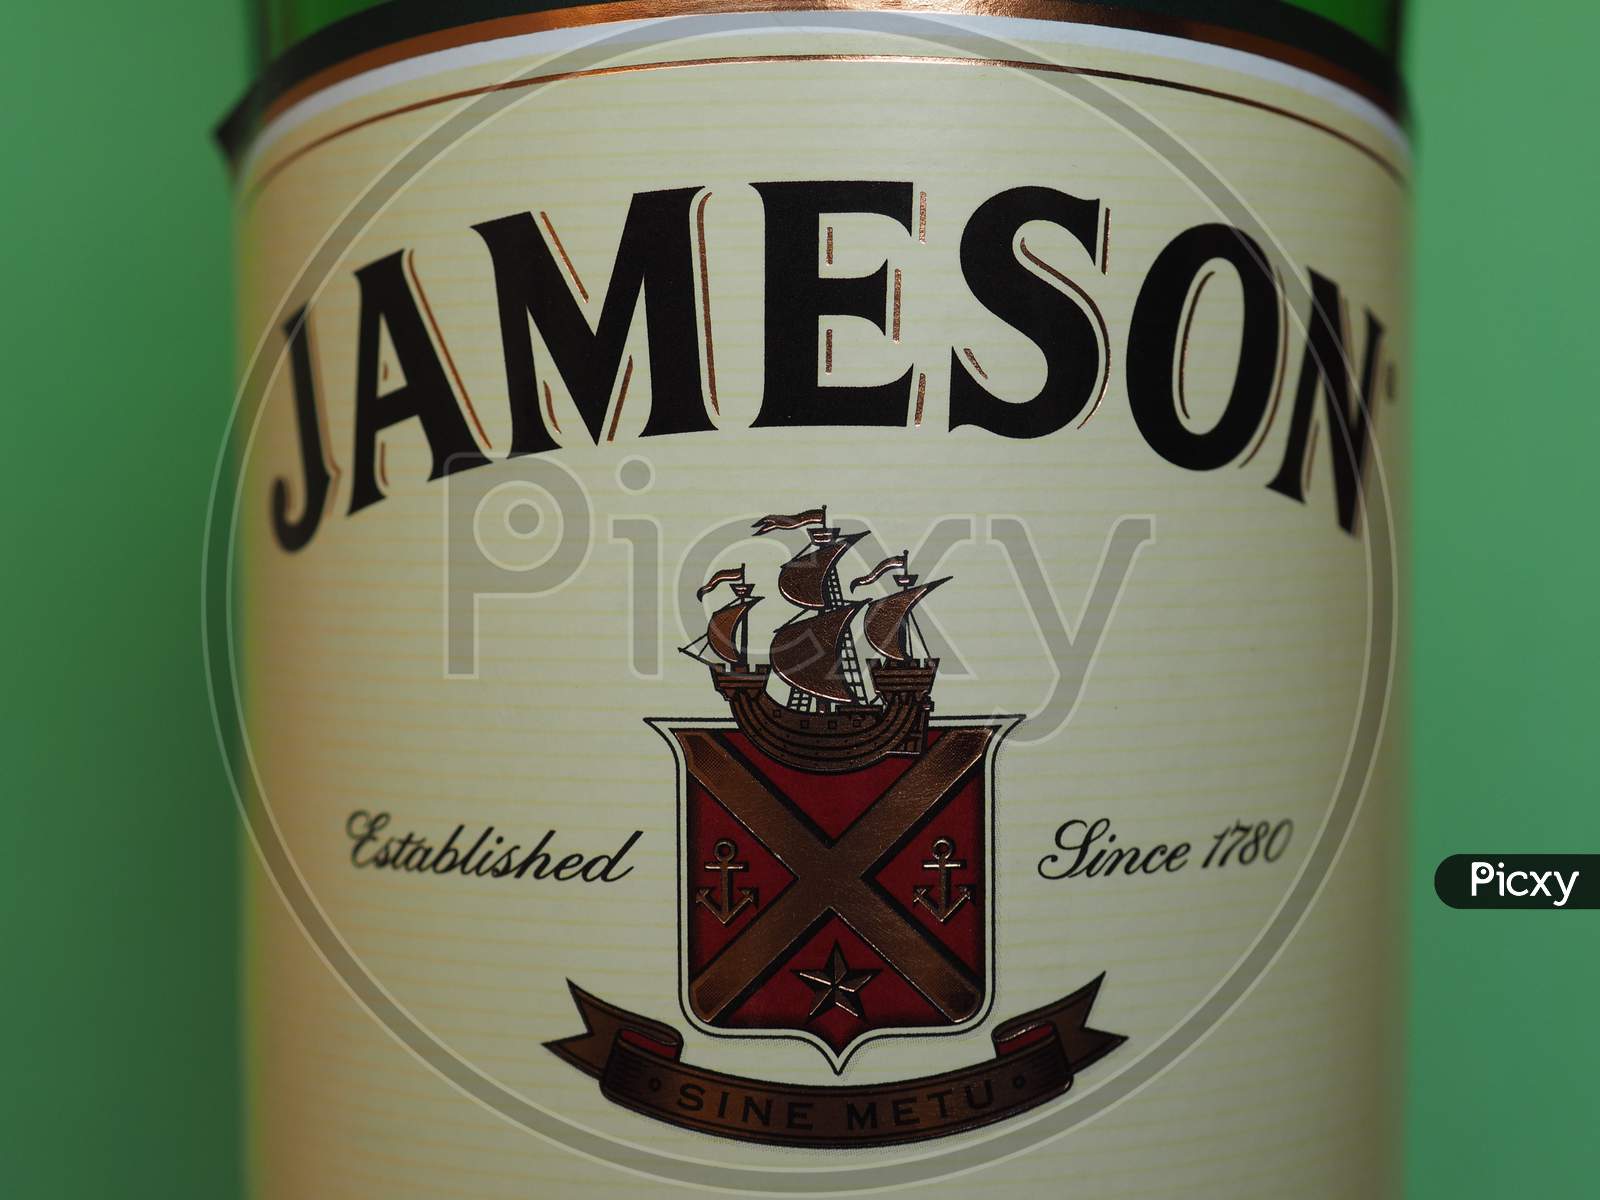 Dublin, Ireland - Circa December 2018: Jameson Irish Whiskey Bottle